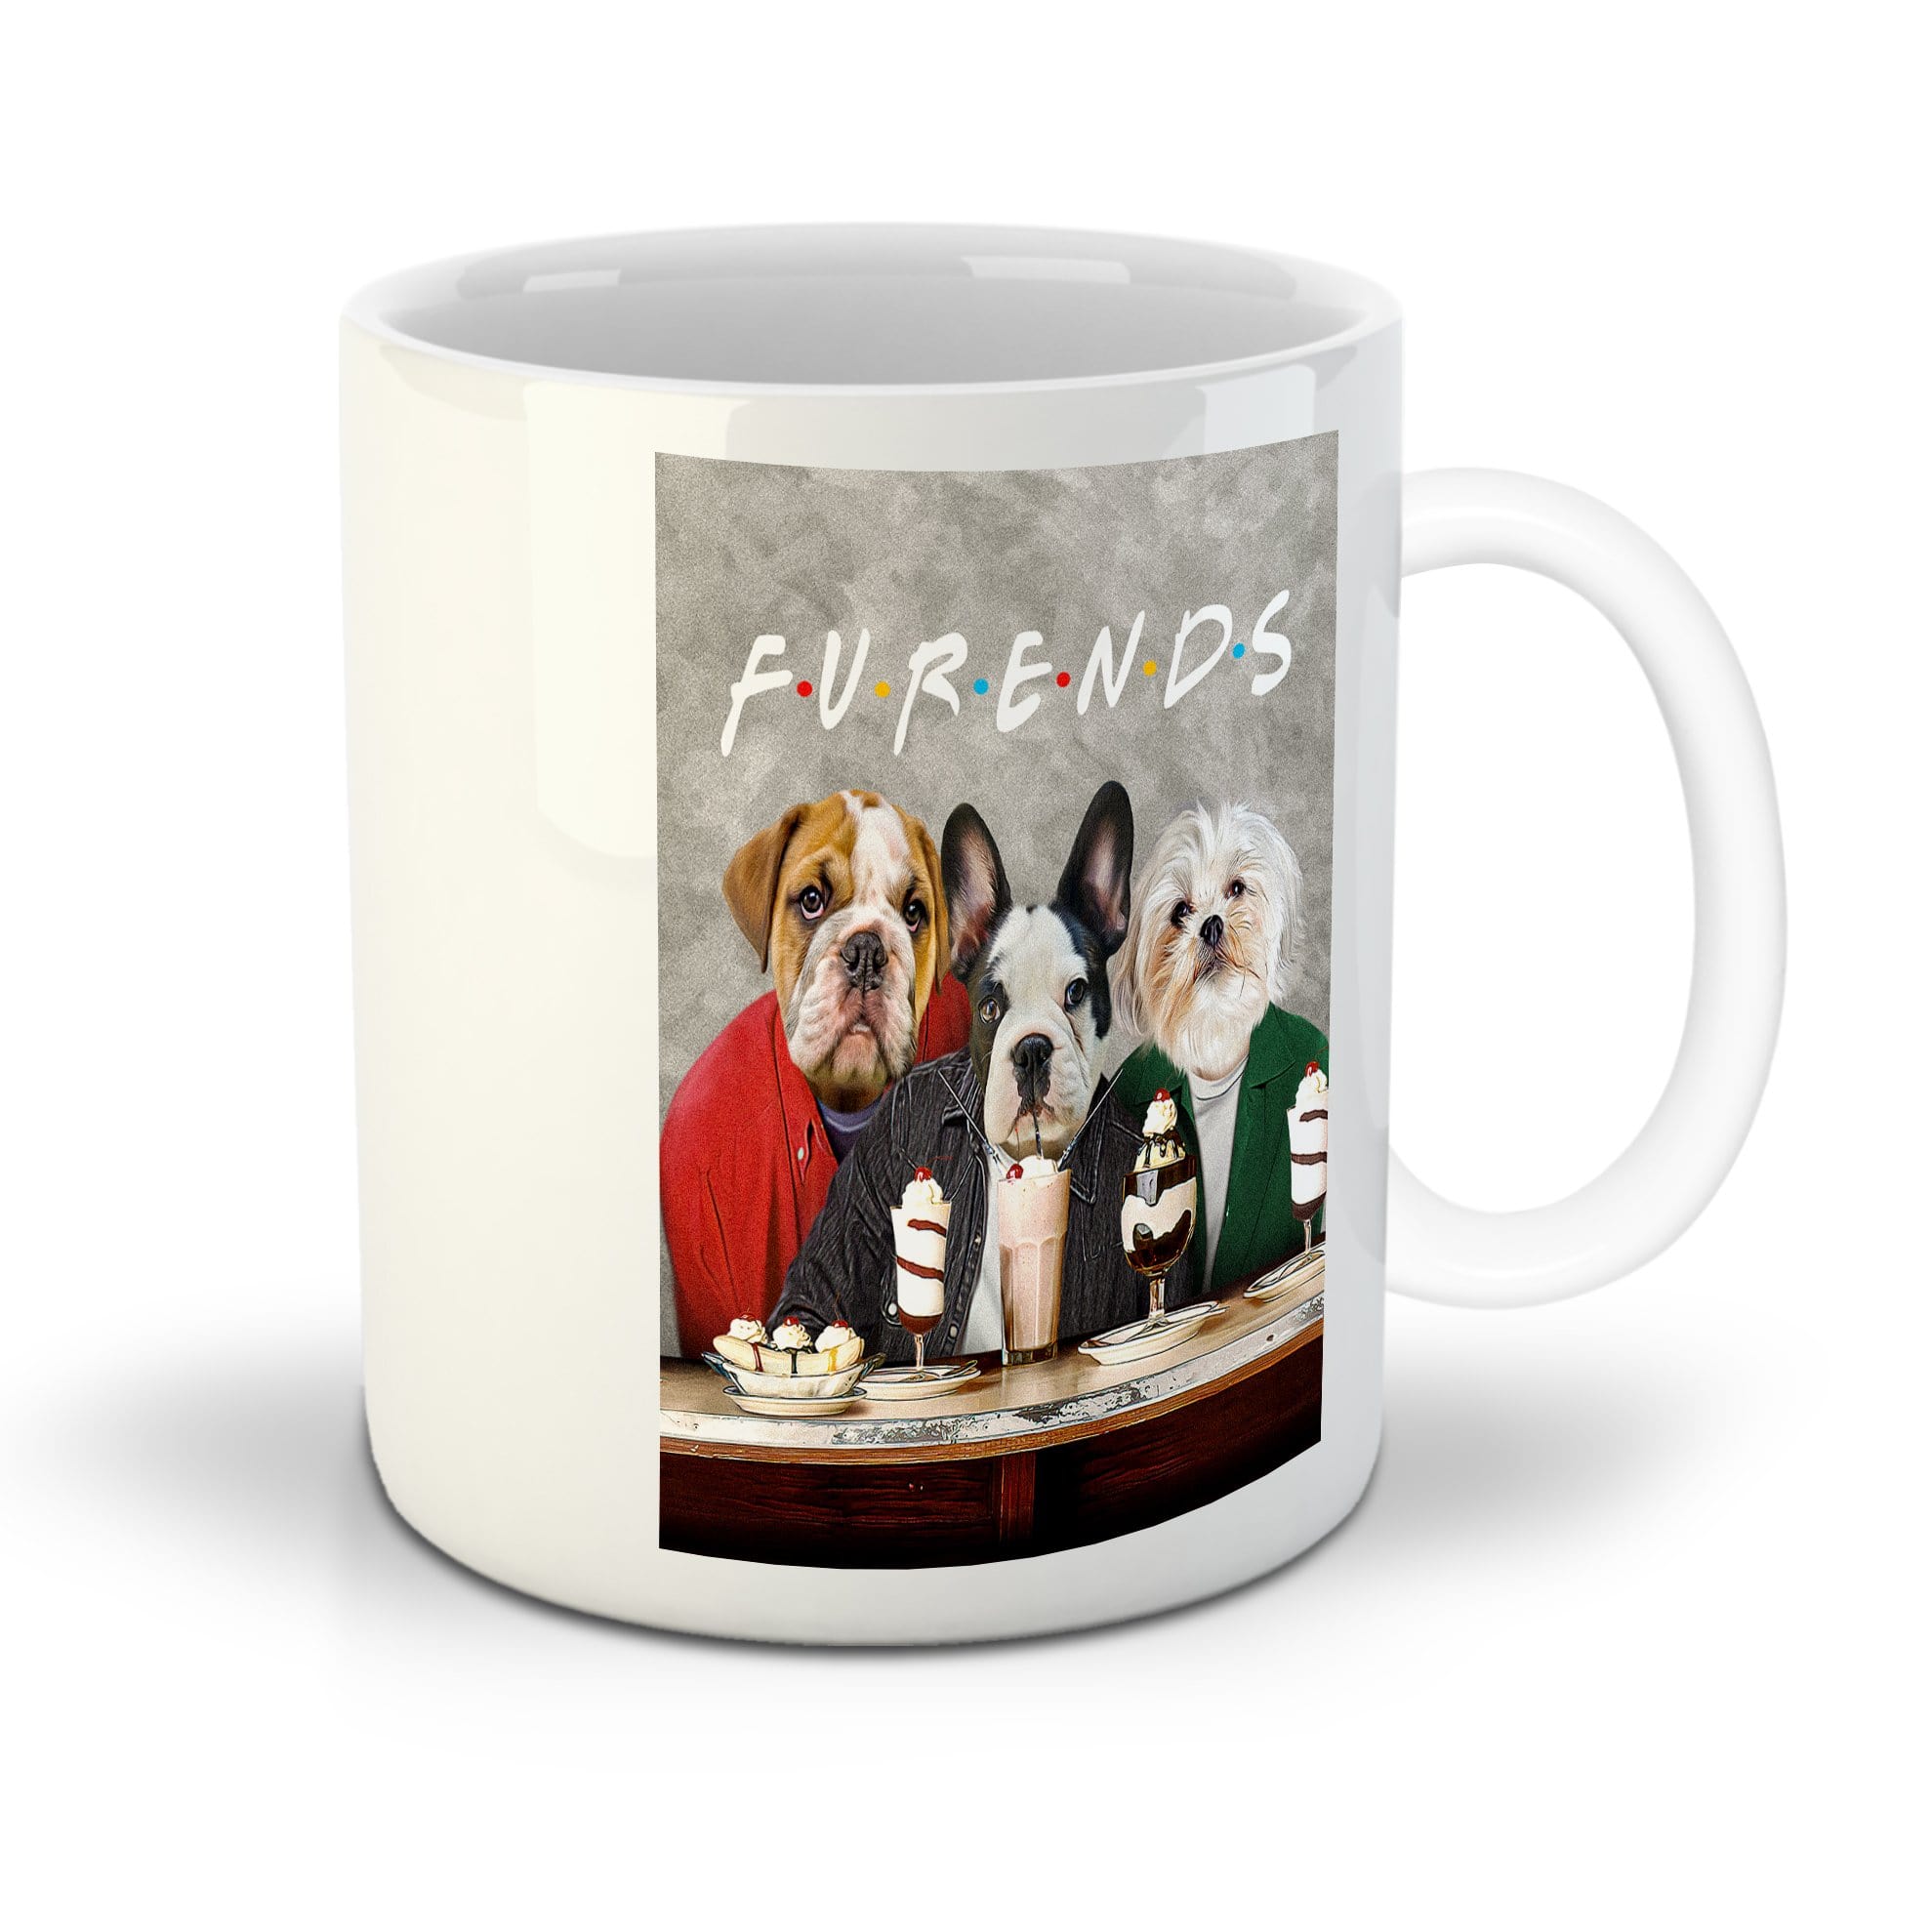 &#39;Furends&#39; Personalized 3 Pet Mug